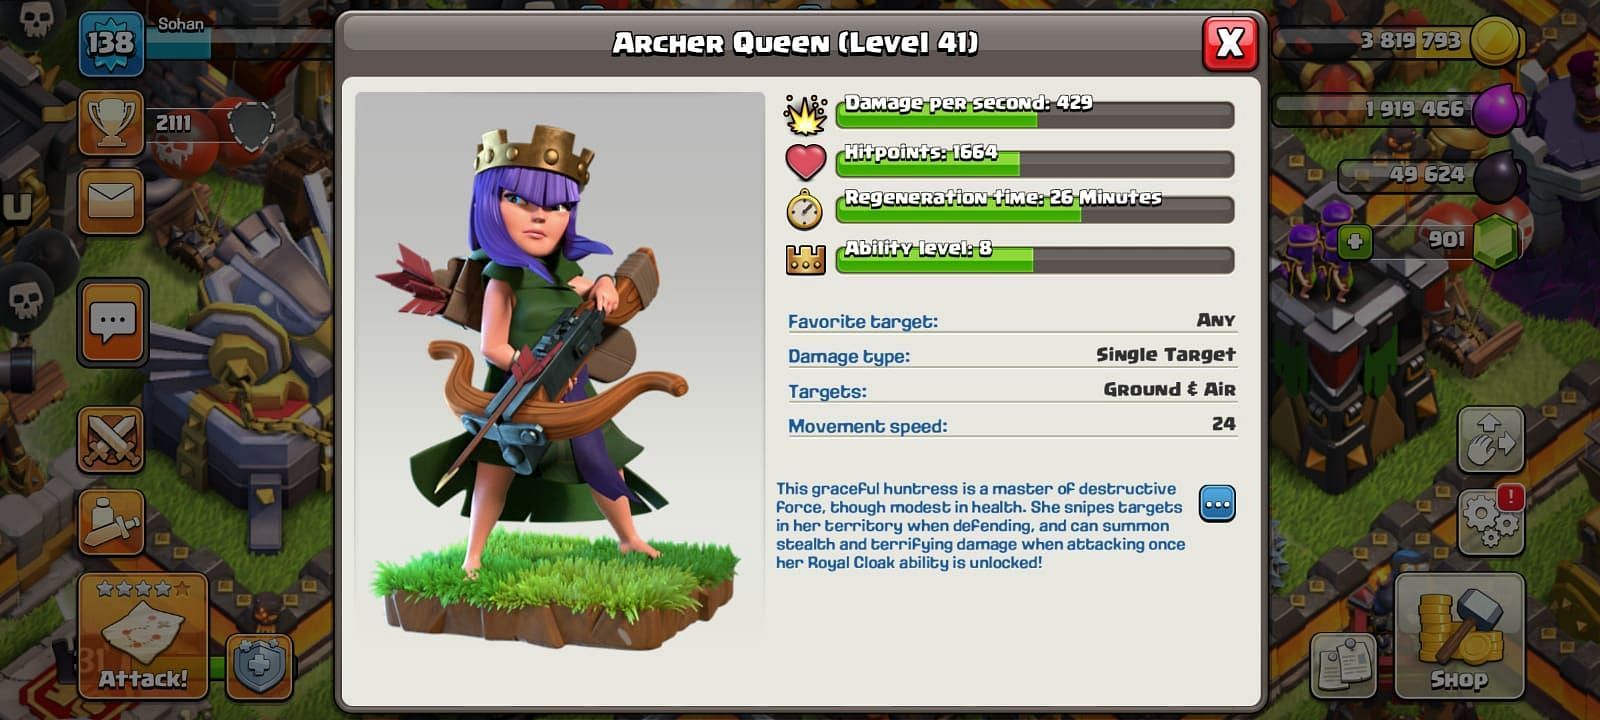 Clash of Clans Archer Queen stats (Image via Sportskeeda)